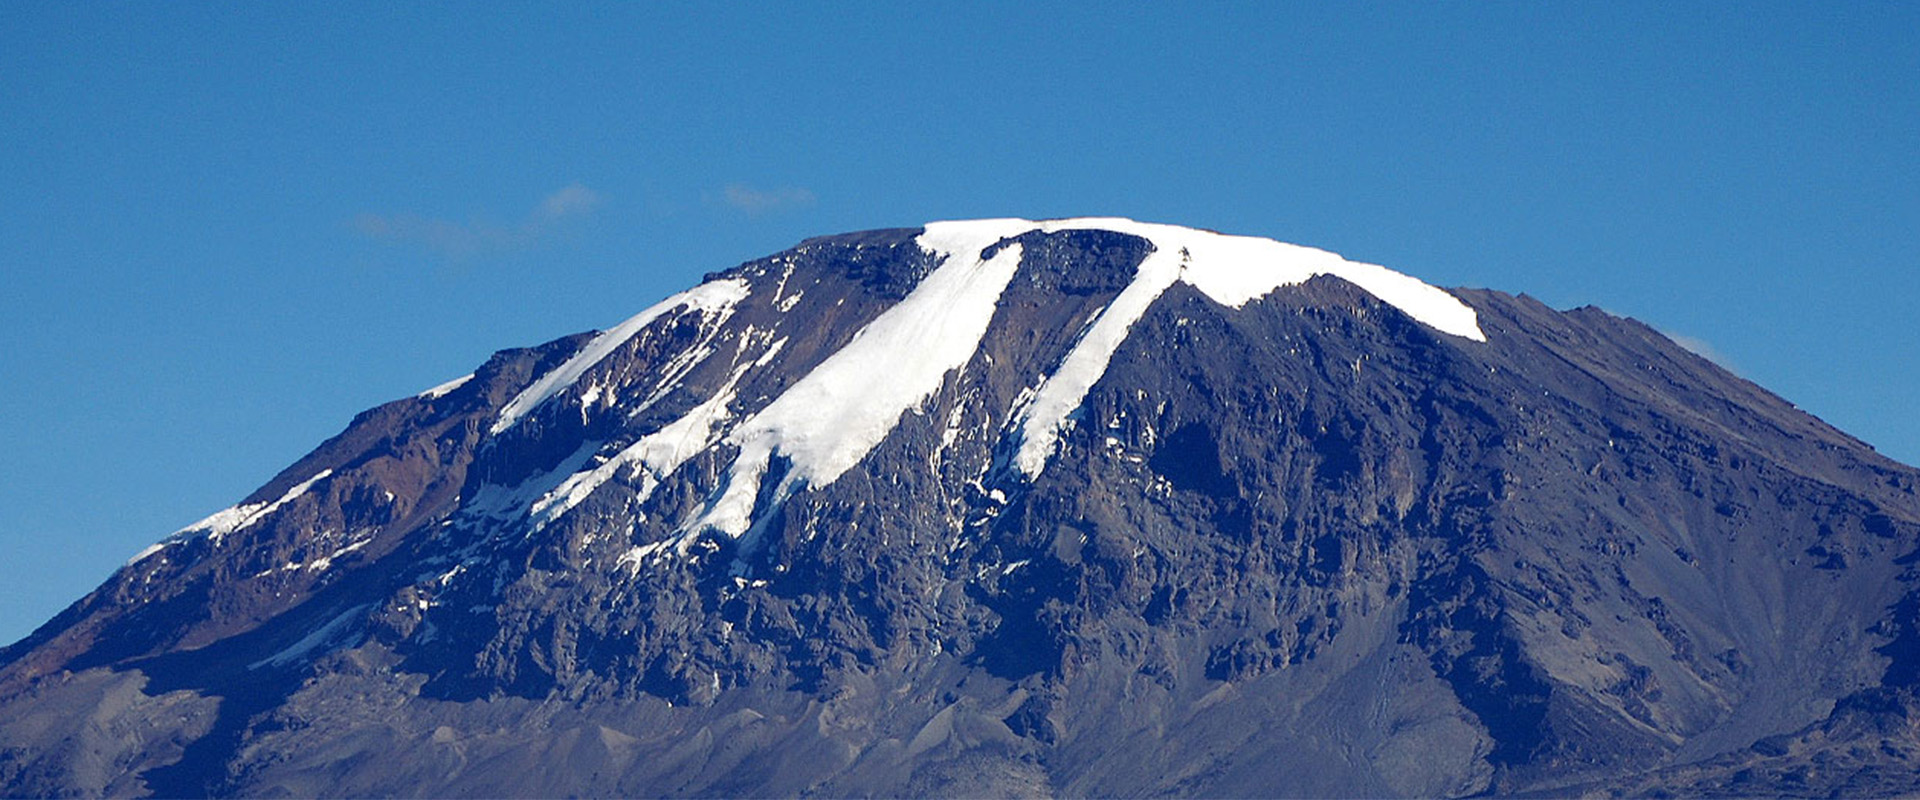 Mount Kilimanjaro NP2